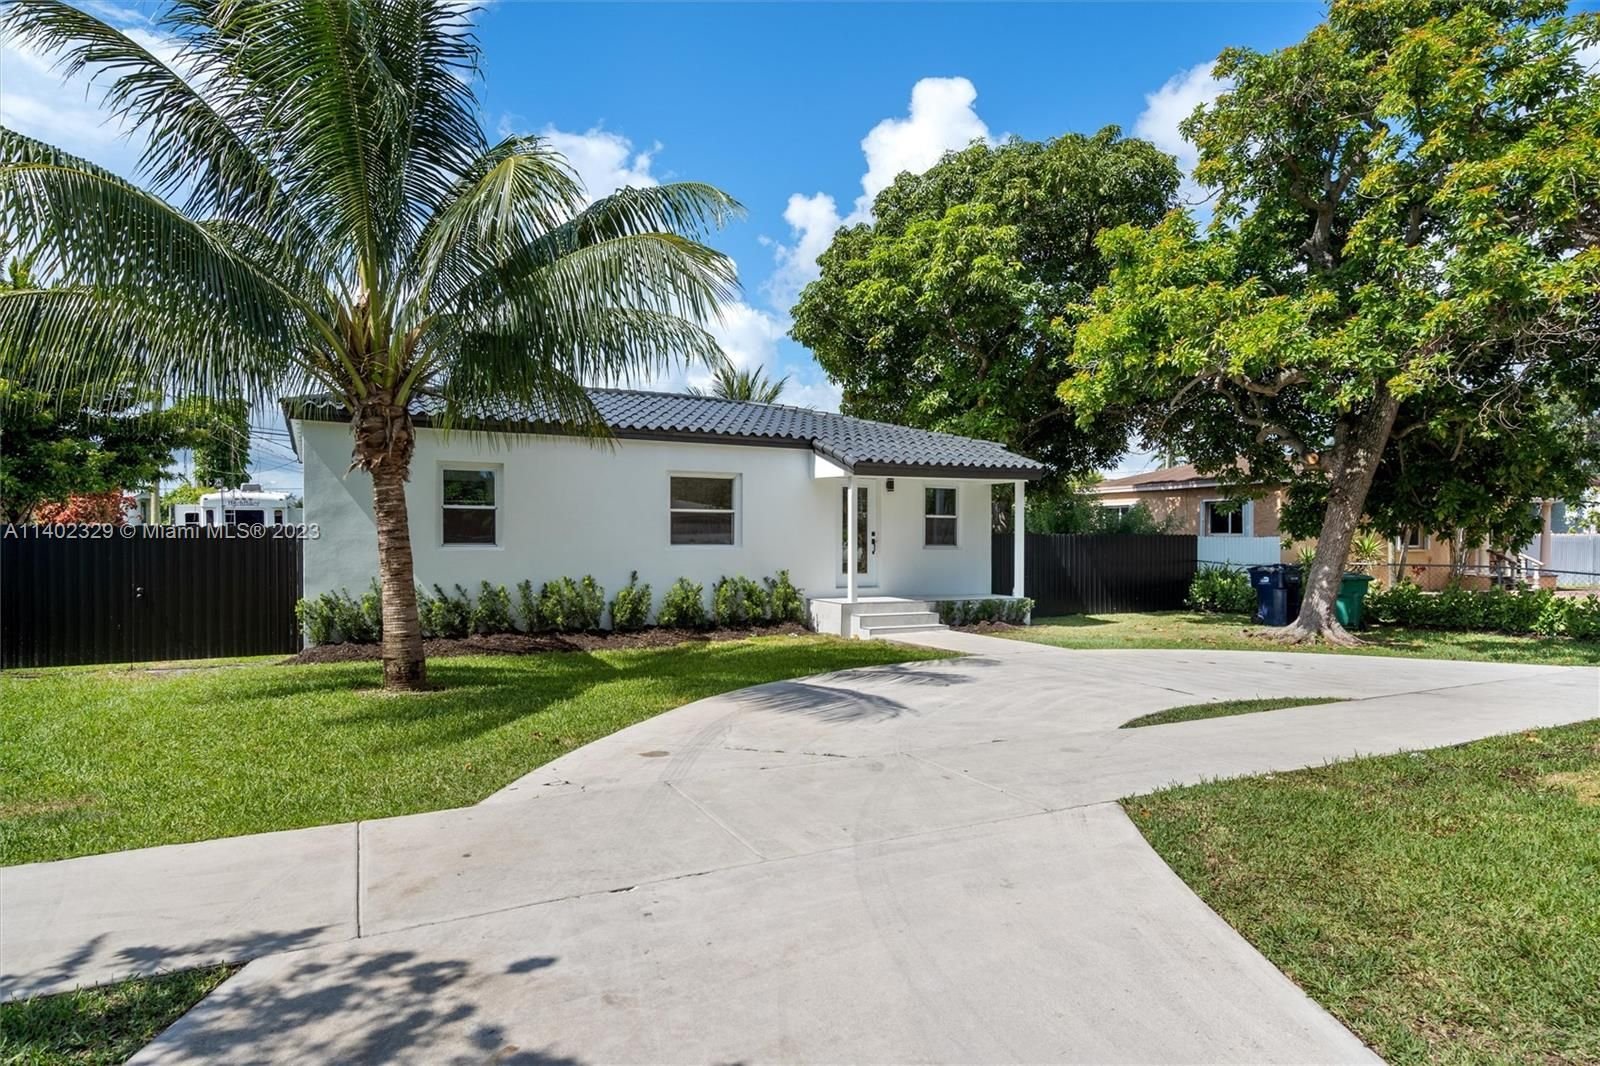 Real estate property located at 7324 16th St, Miami-Dade County, Miami, FL